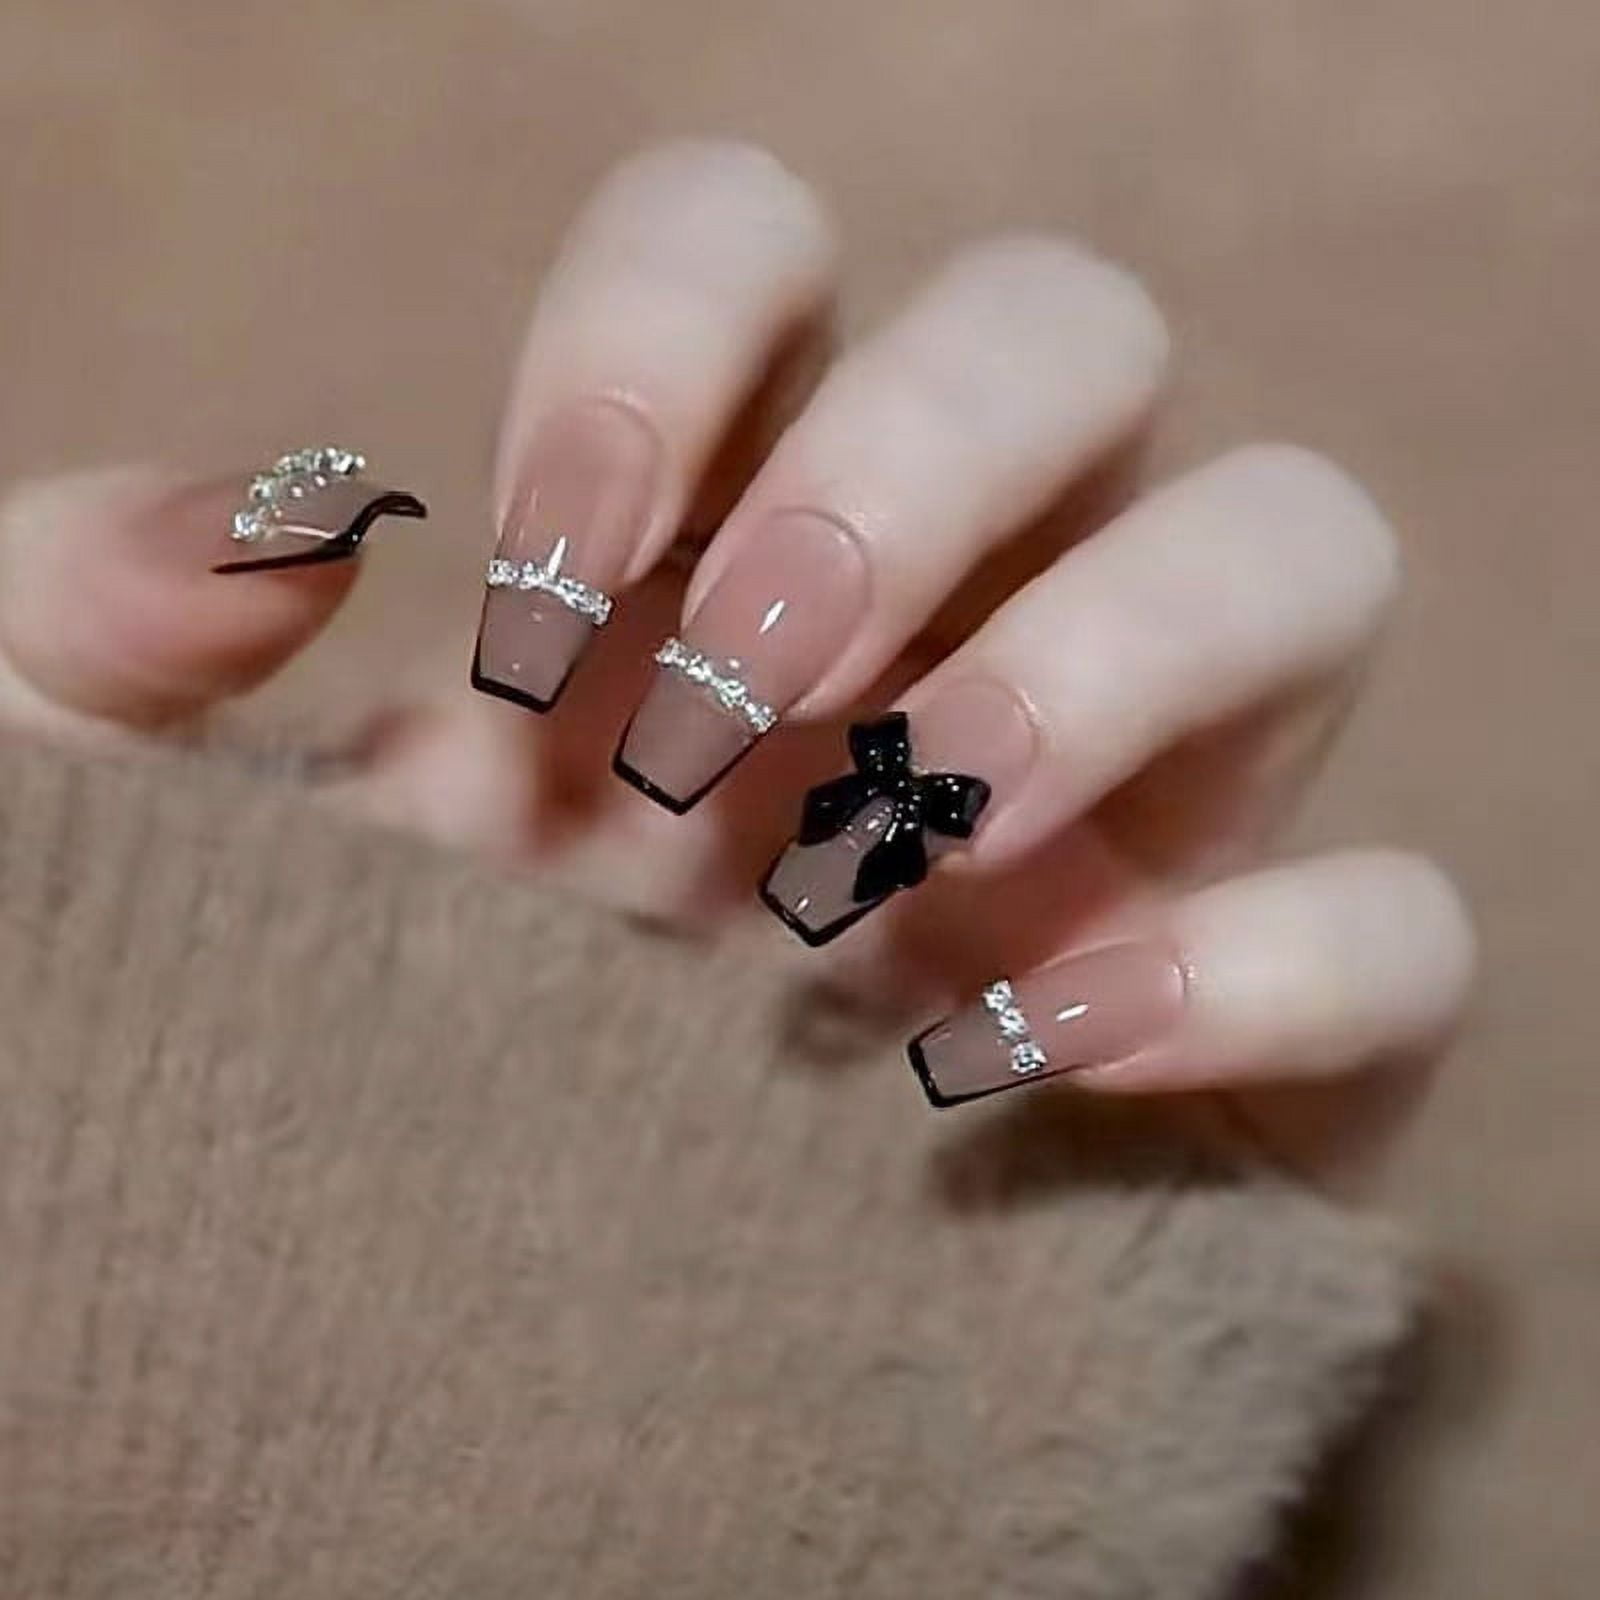 My Nice Nails GmbH - Matte Black – Gel Nails by My Nice Nails ⠀⠀⠀⠀⠀⠀⠀⠀⠀  ⓌⒽⒶⓉ ⒹⓄ ⓎⓄⓊ ⓉⒽⒾⓃⓀ? ⠀⠀⠀⠀⠀⠀⠀⠀⠀ #MyNiceNails #zurichnails #nailsalonzurich  #nailstudiozurich #gelnailszurich #gelnägelzürich #gelpolishzurich ...